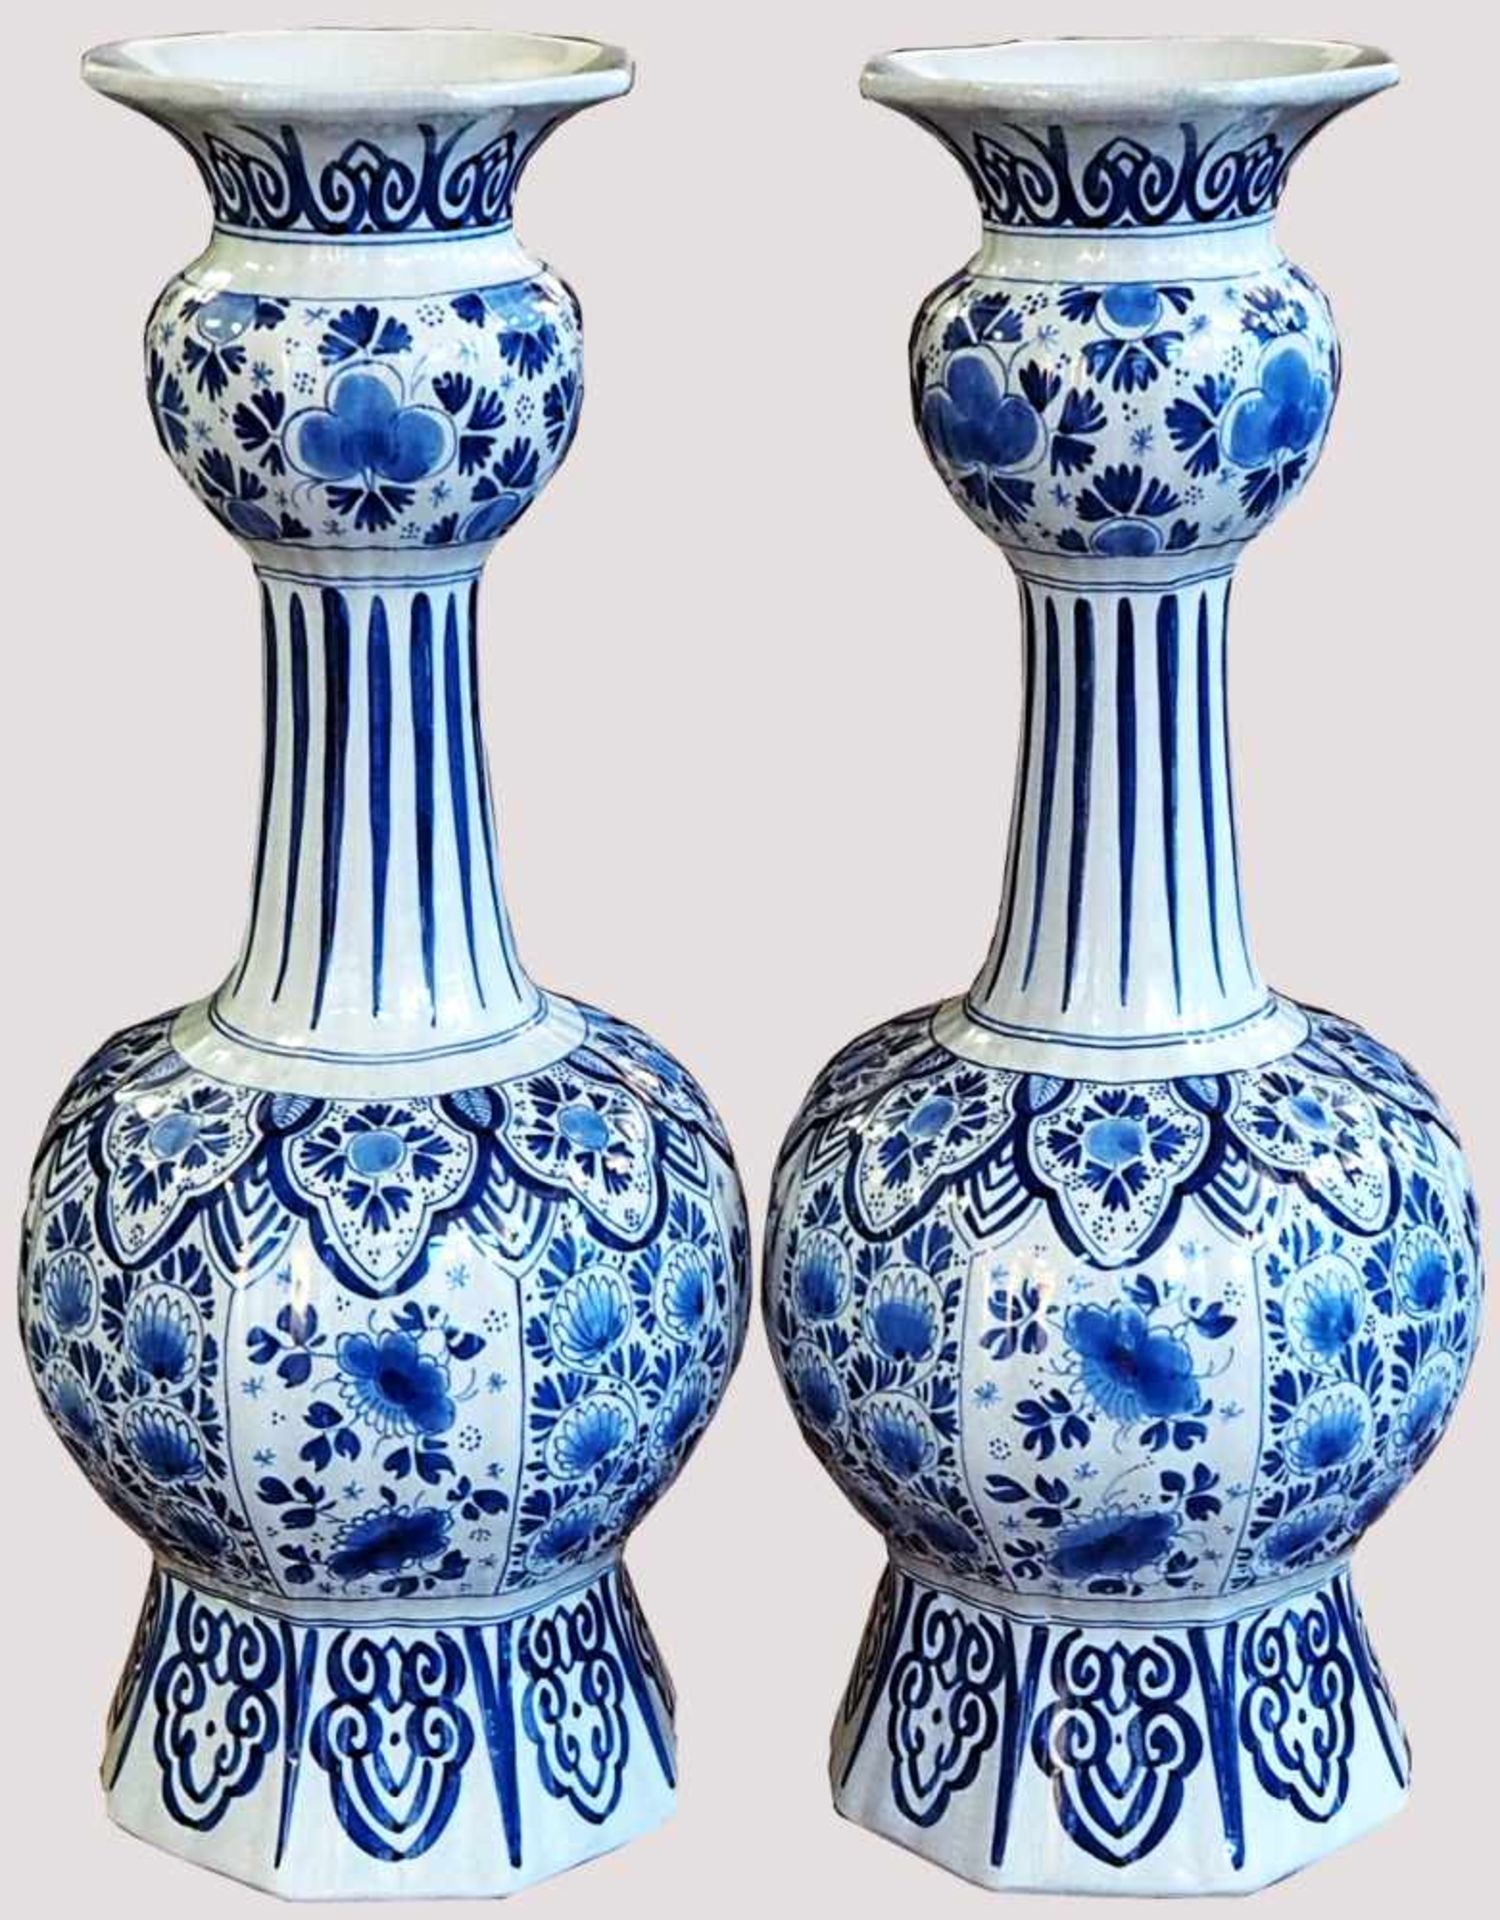 2 Vasen Delfter Fayence 19. Jh.blau/weiß bemalt, floraler Dekor, eckige Form, Höhe jew. ca. 45cm,